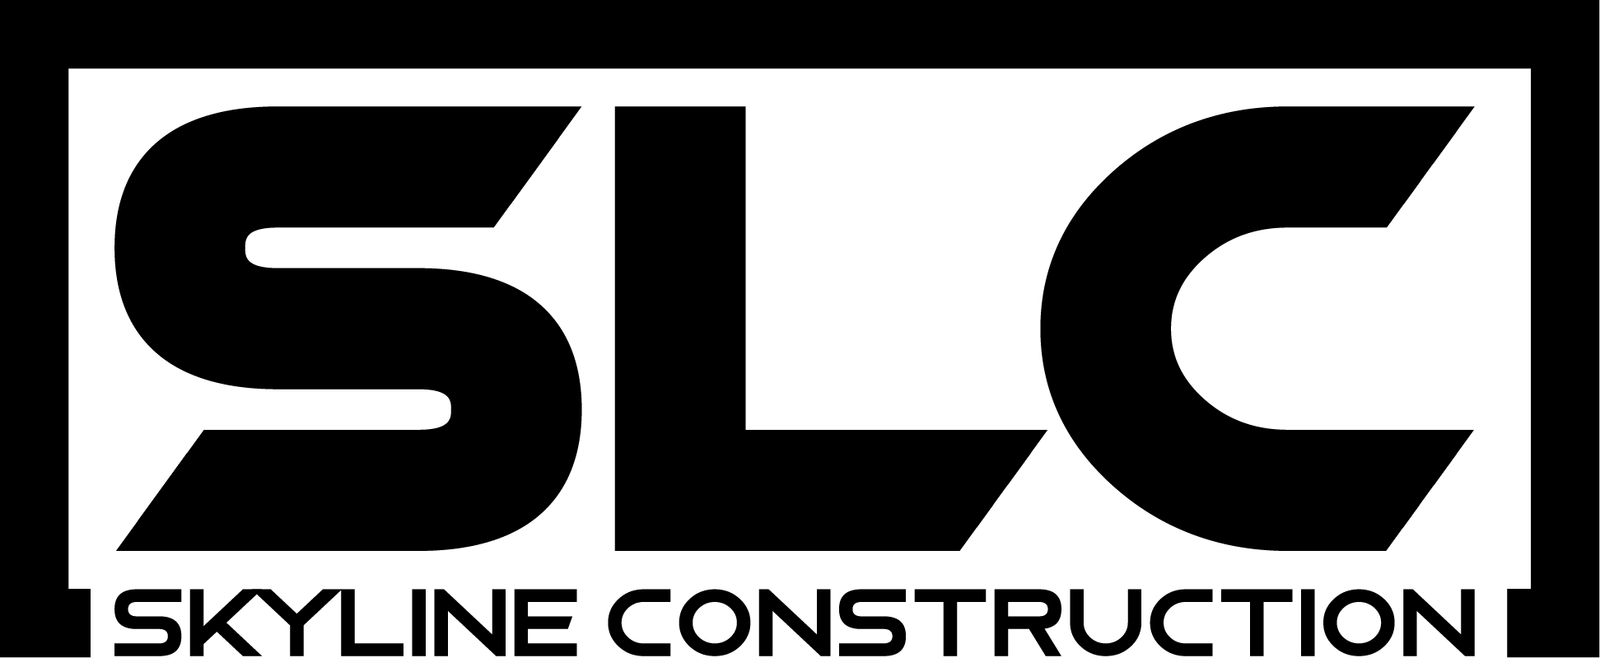 Skyline Construction Logo